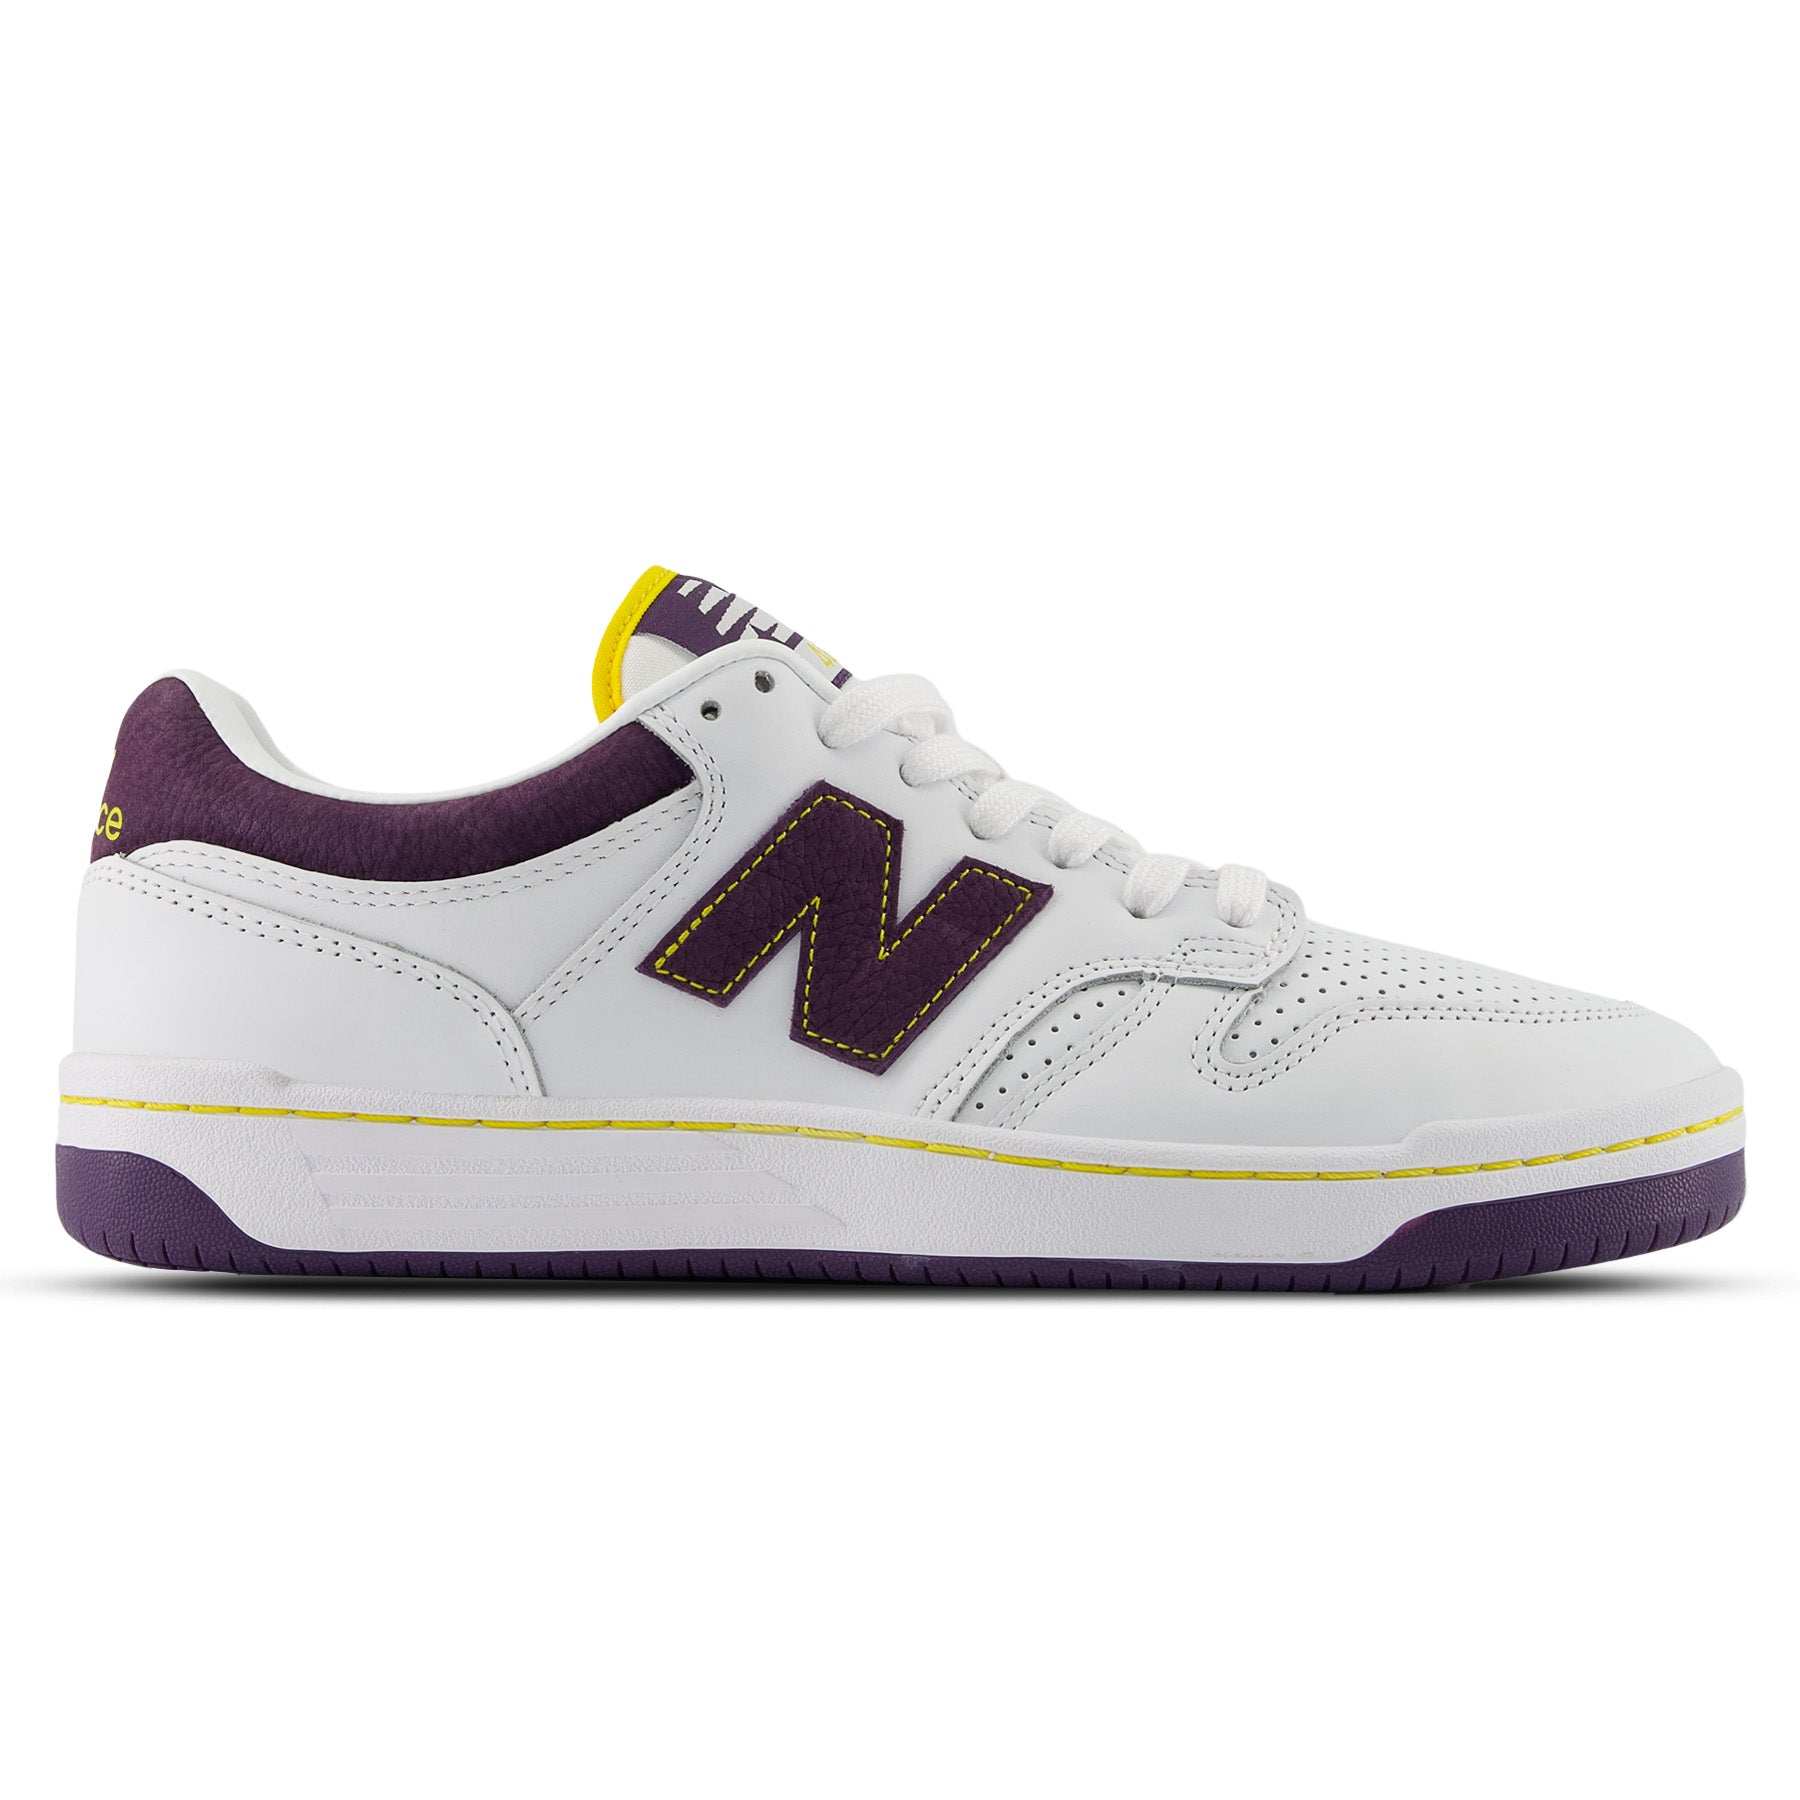 New Balance Numeric NM480PST White/Purple